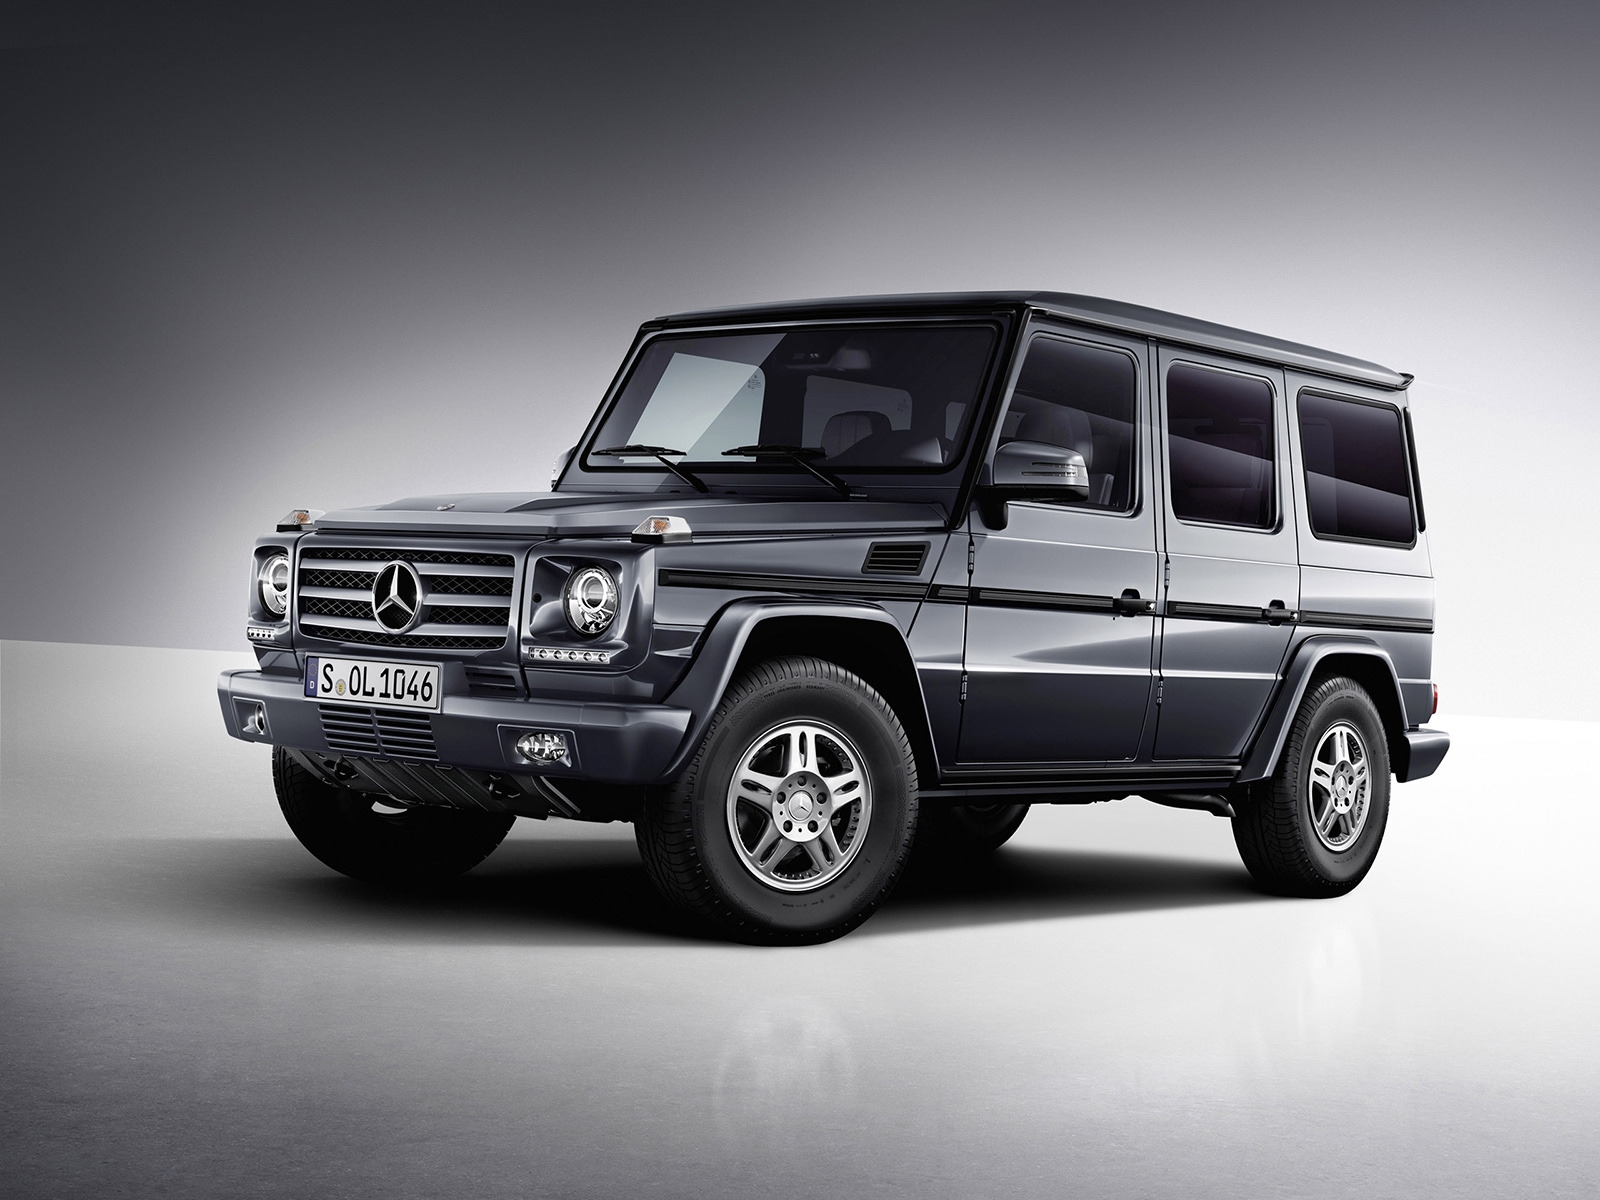 Mercedes Benz G Class Studio 2013 for 1600 x 1200 resolution